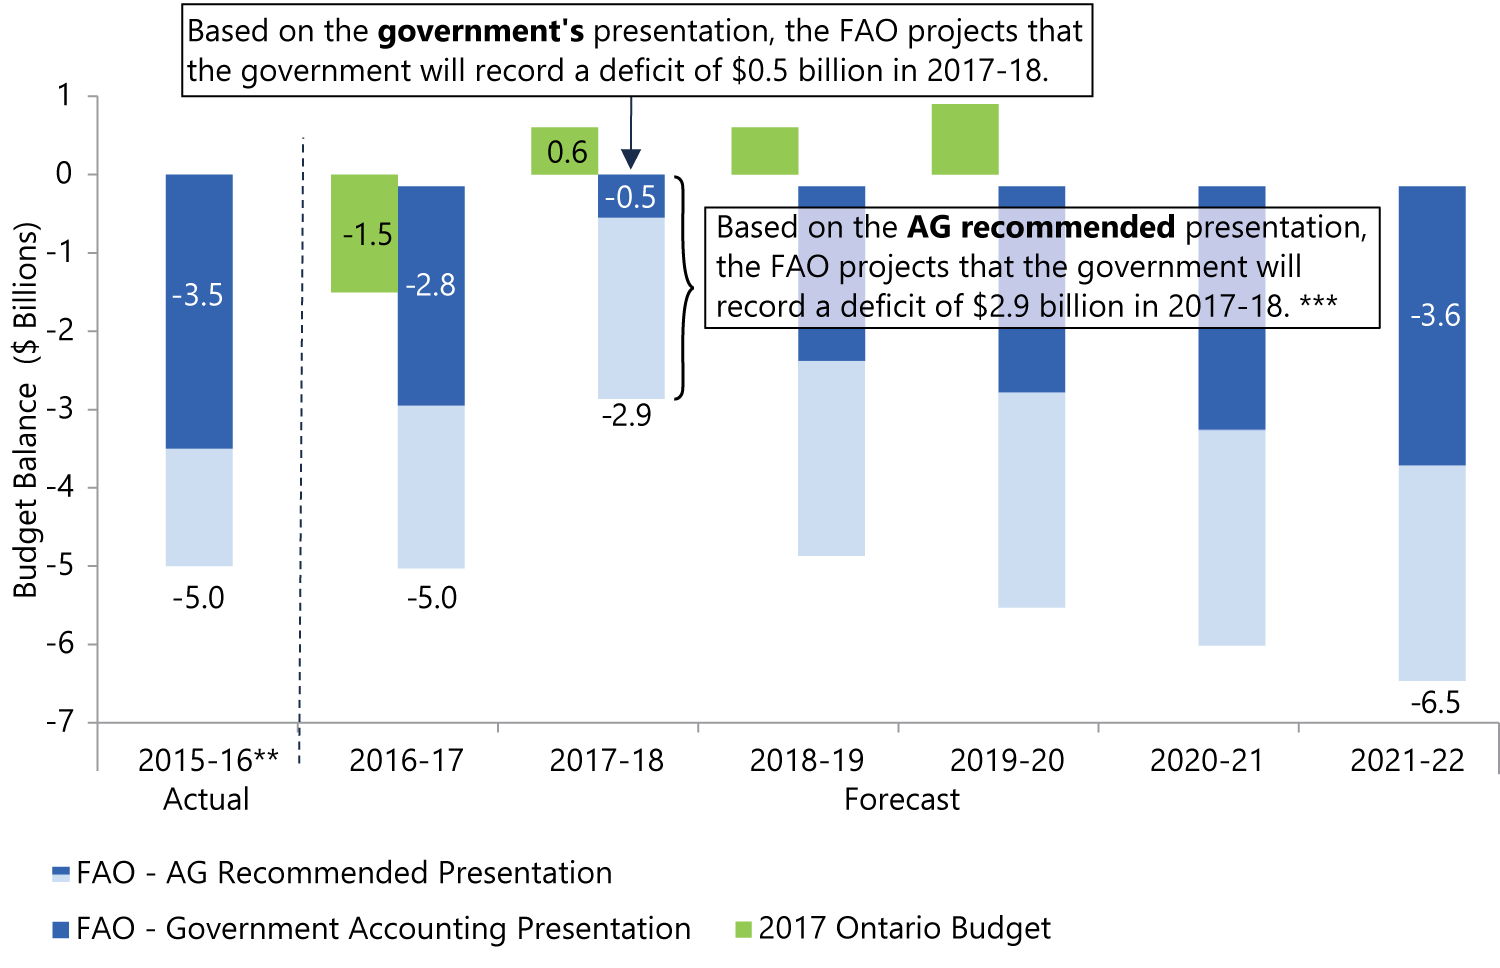 Ontario's Budget Balance